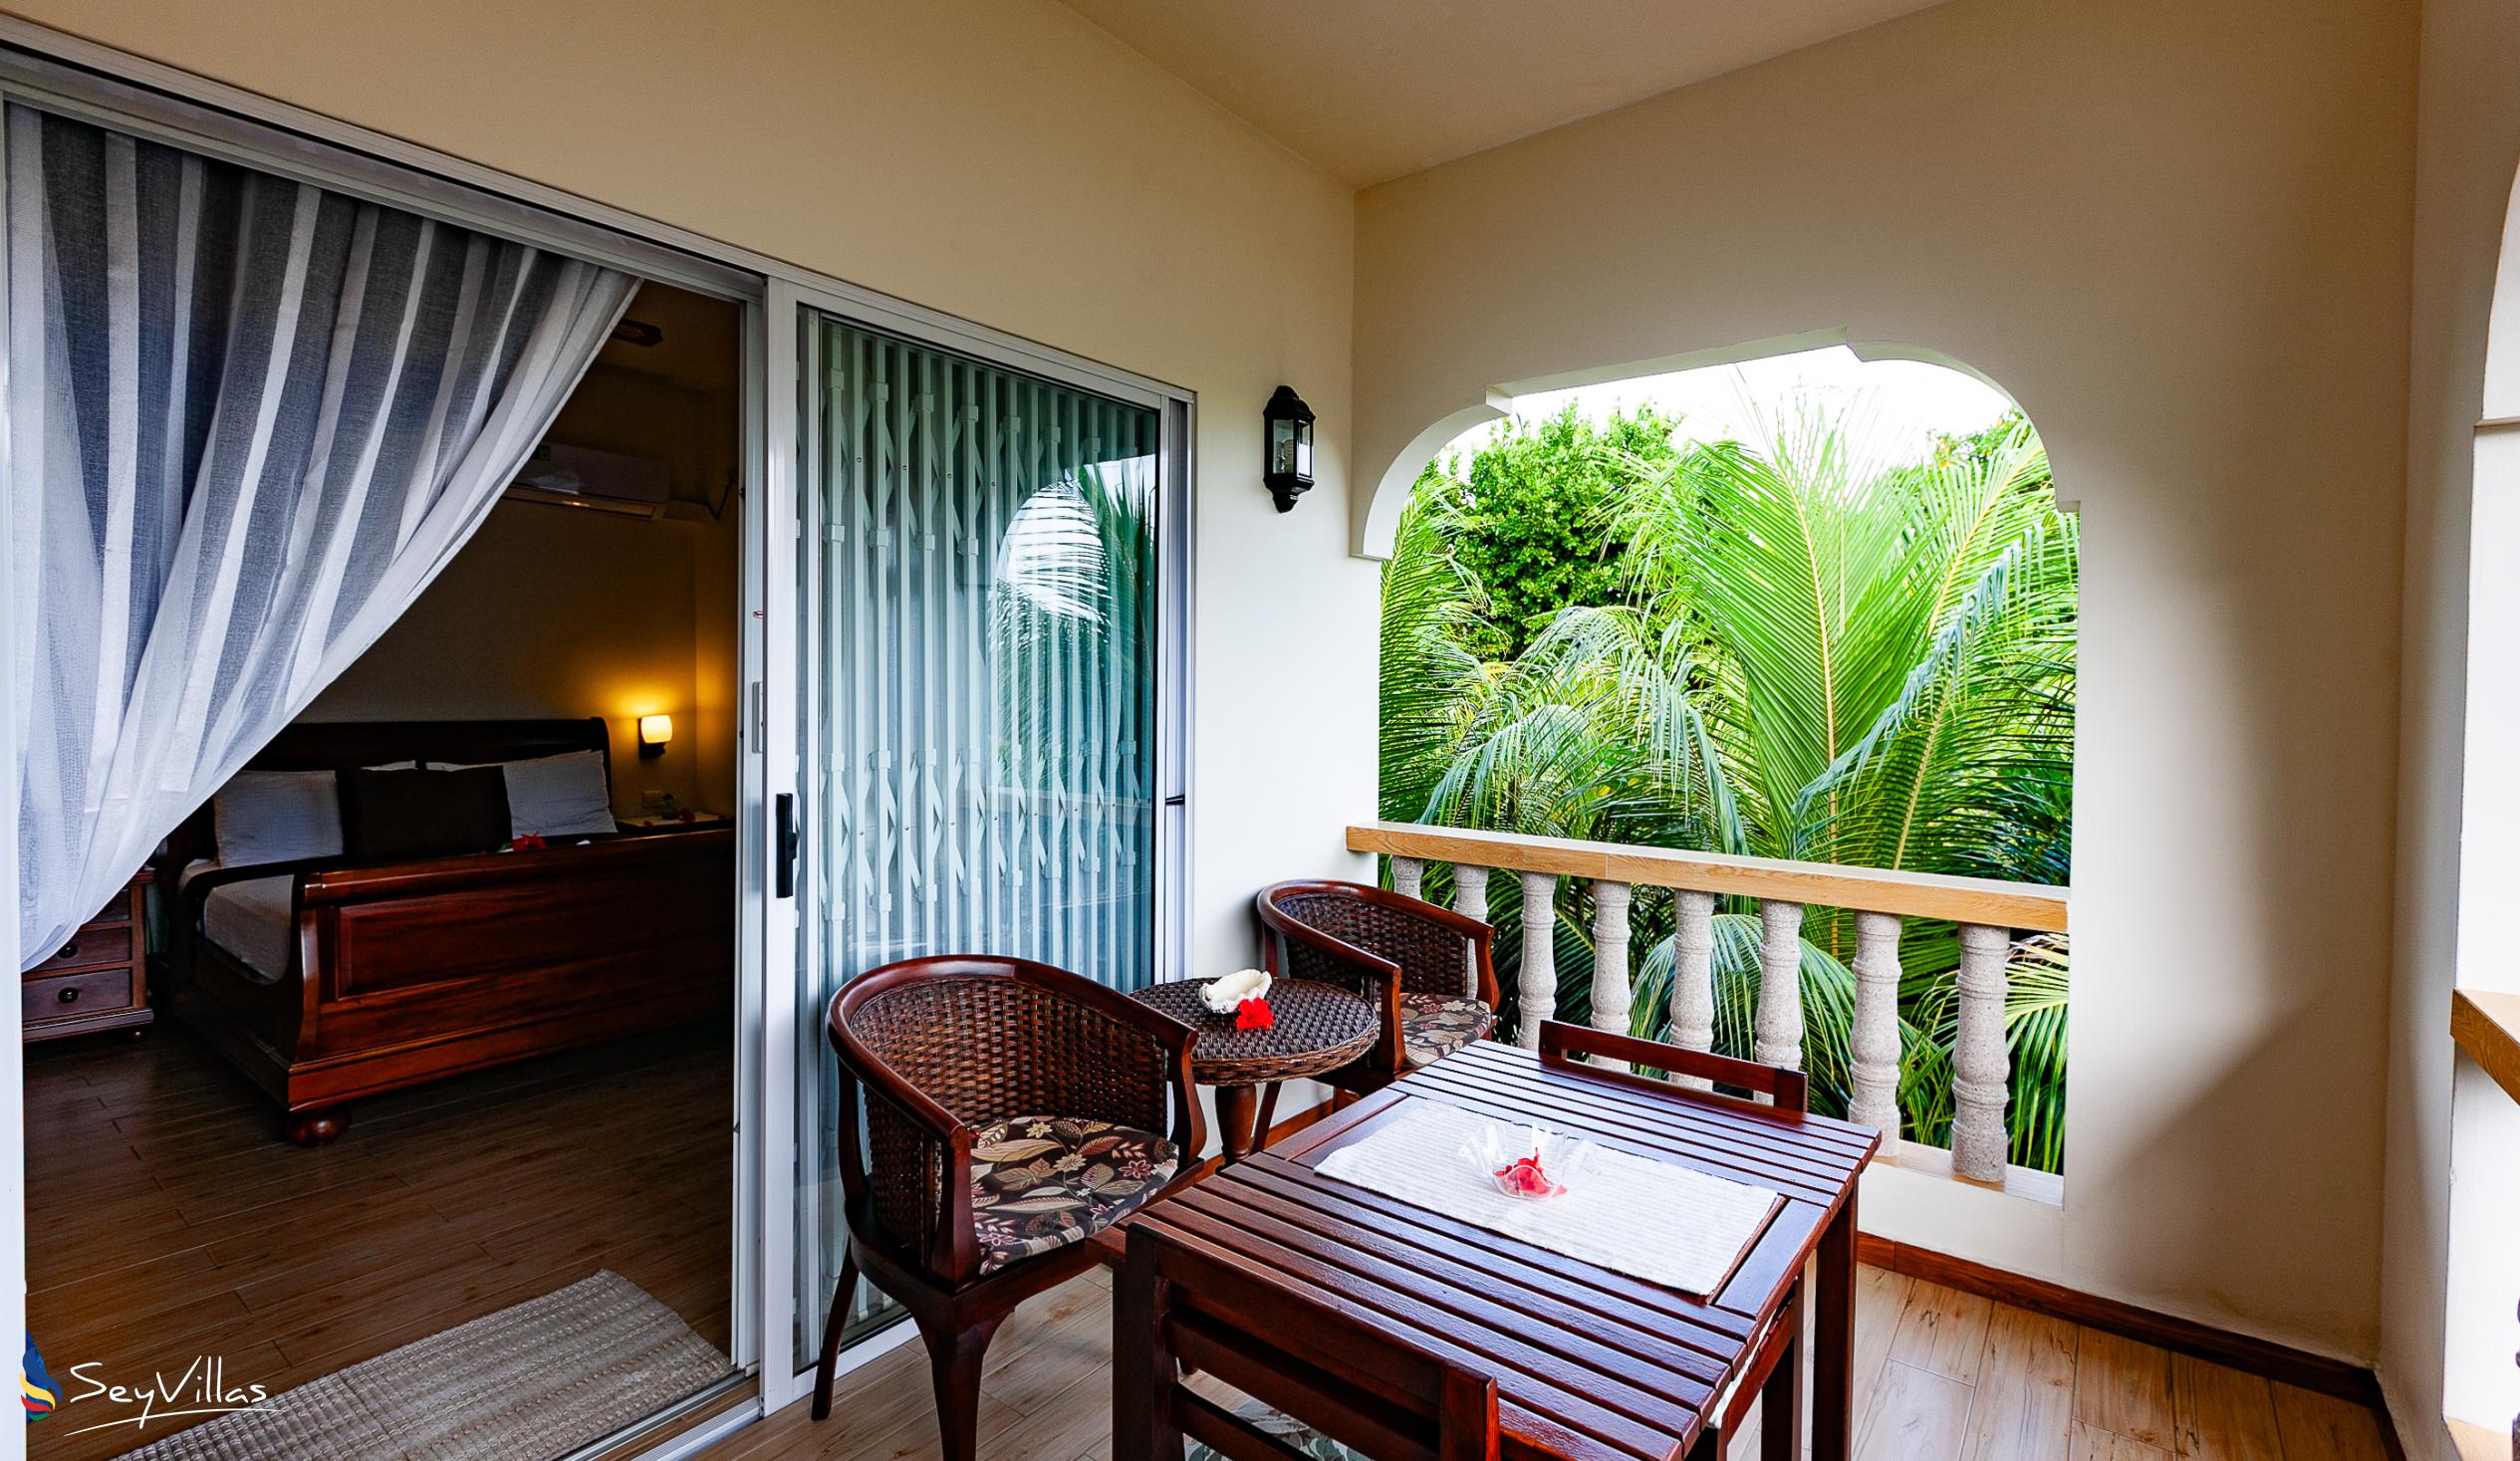 Photo 58: Seashell Beach Villa - 2-Bedroom Apartment - Praslin (Seychelles)